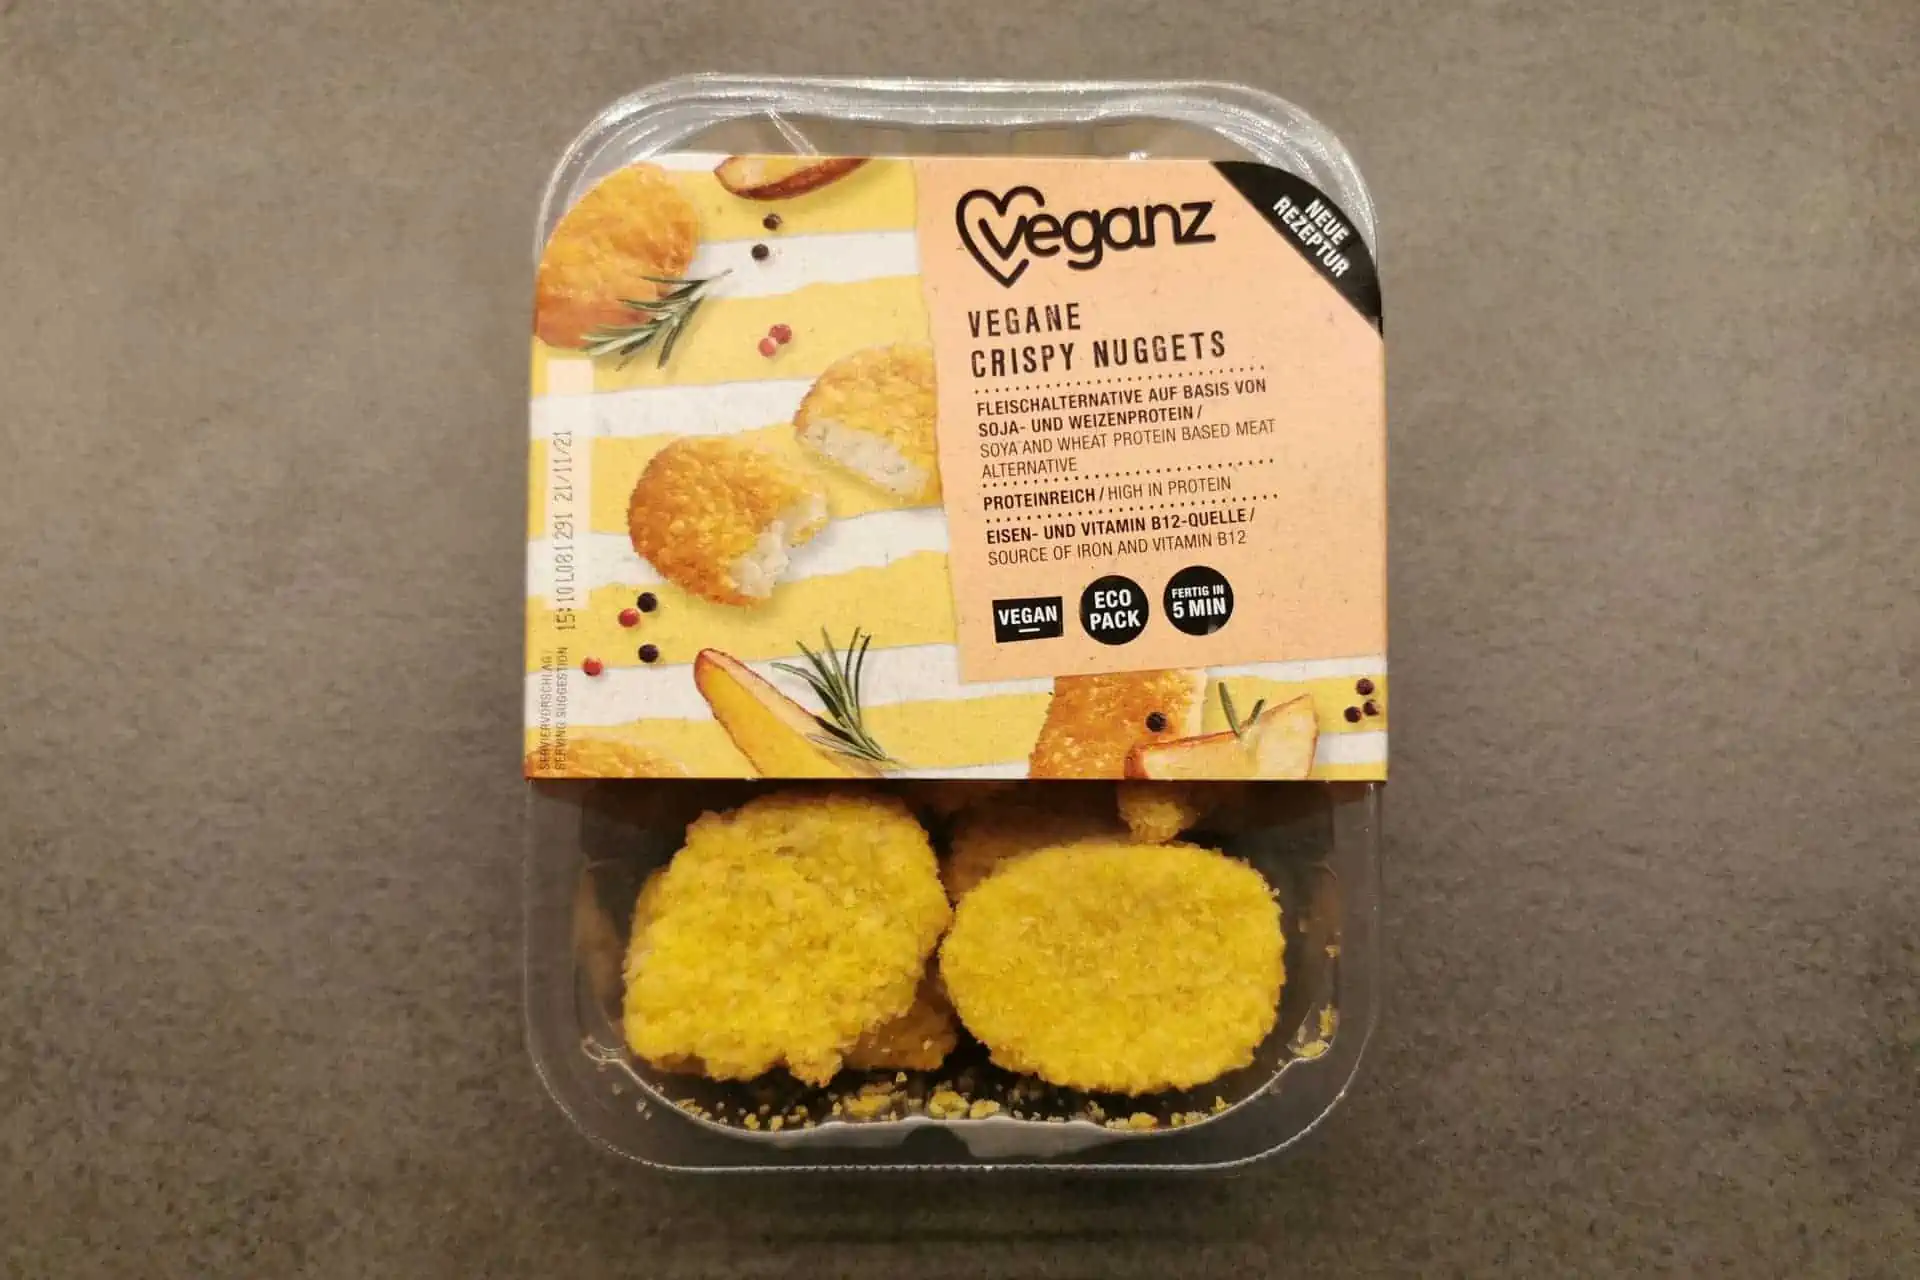 Veganz - Vegane Crispy Nuggets